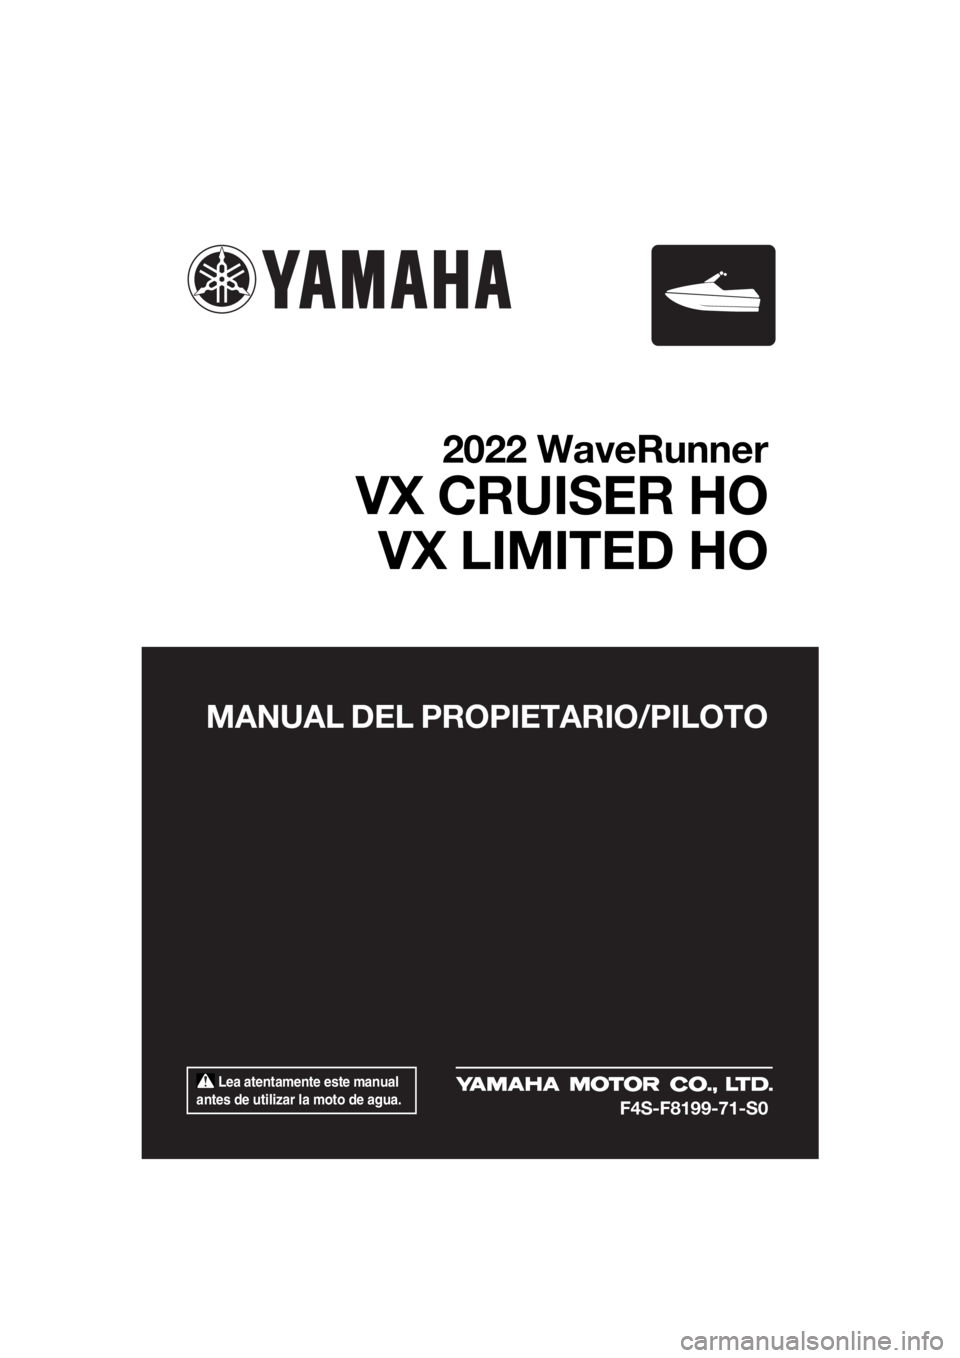 YAMAHA VX CRUISER HO 2022  Manuale de Empleo (in Spanish) 